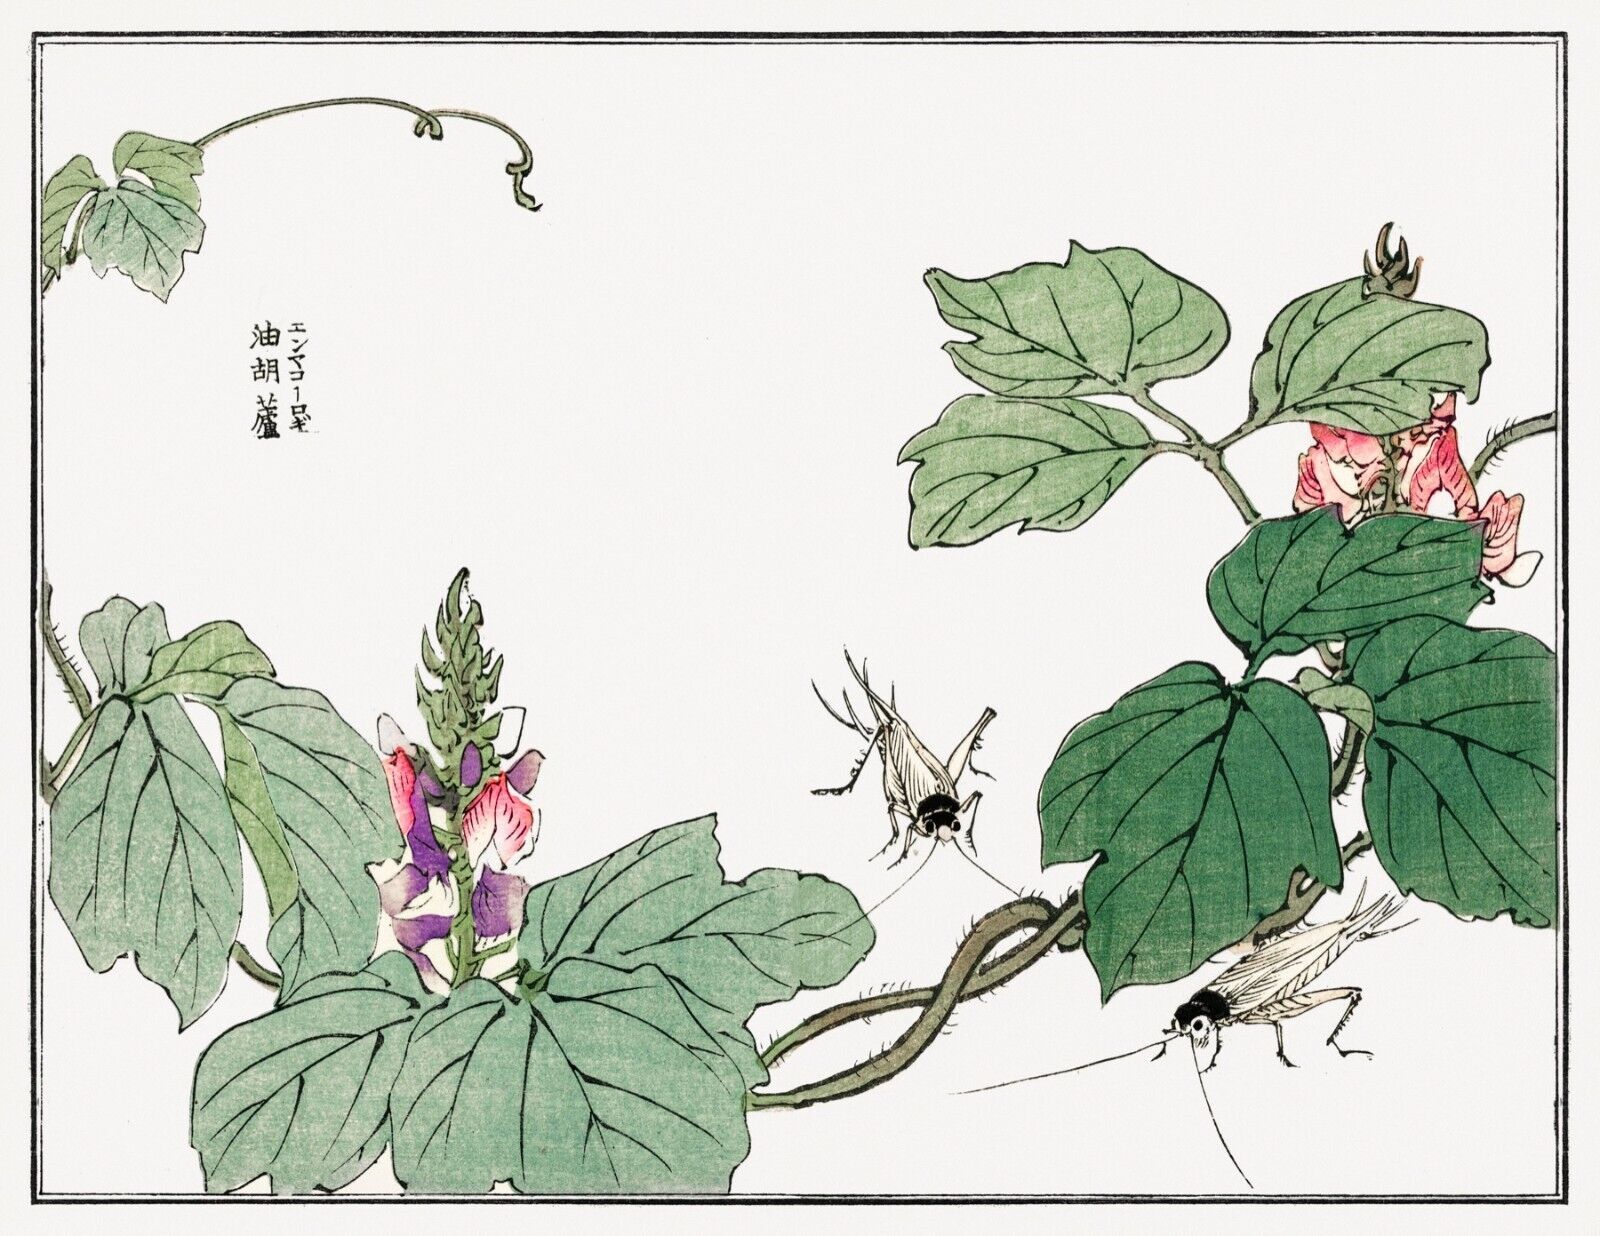 10063.Decor Poster.Room home wall.1910 Japan print.Morimoto Toko art.Floral